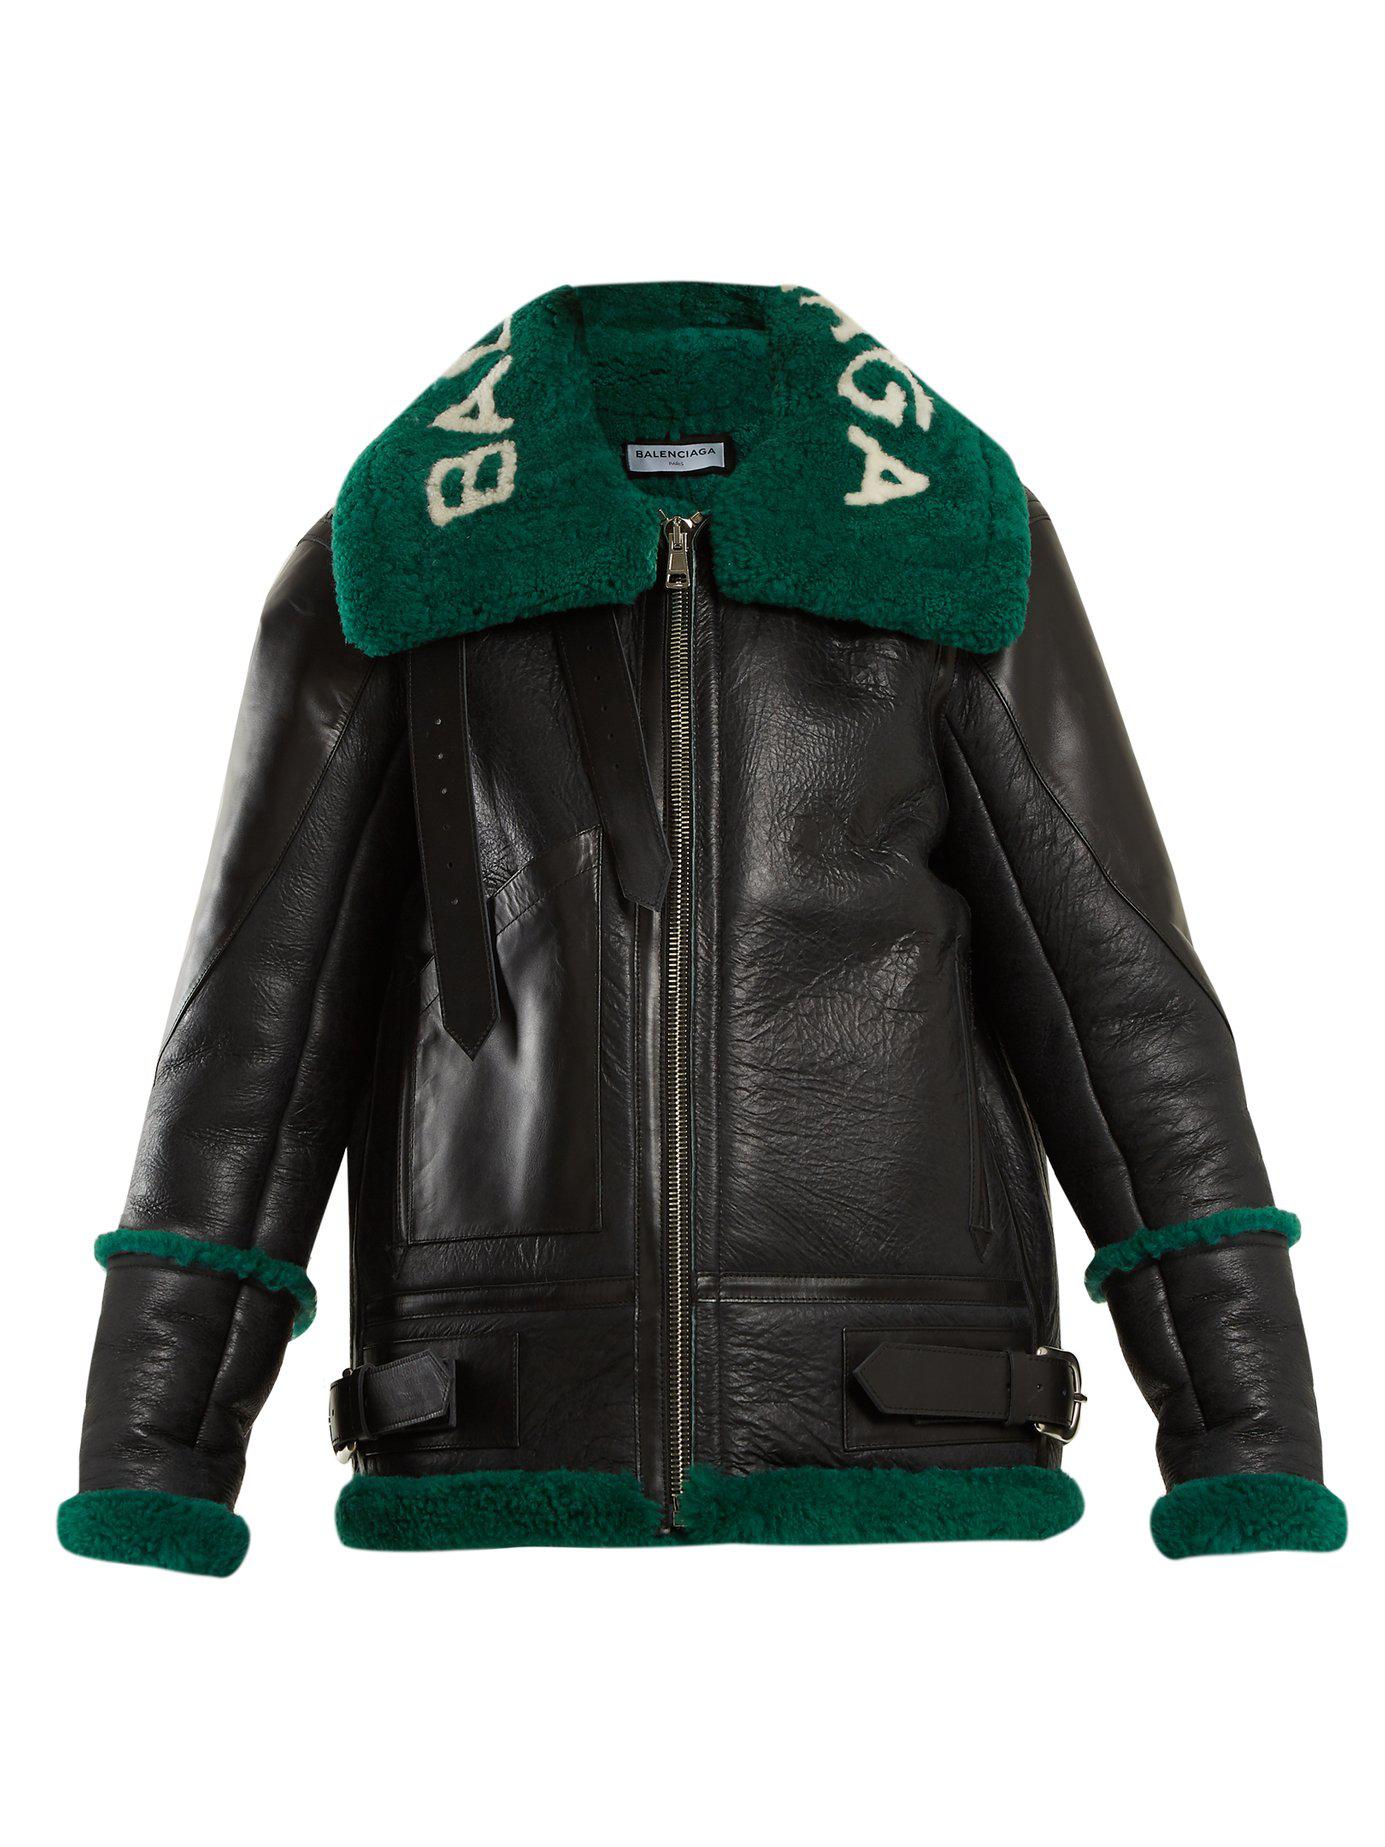 Balenciaga Leather Le Bombardier Shearling Jacket in Black Green (Black) -  Lyst